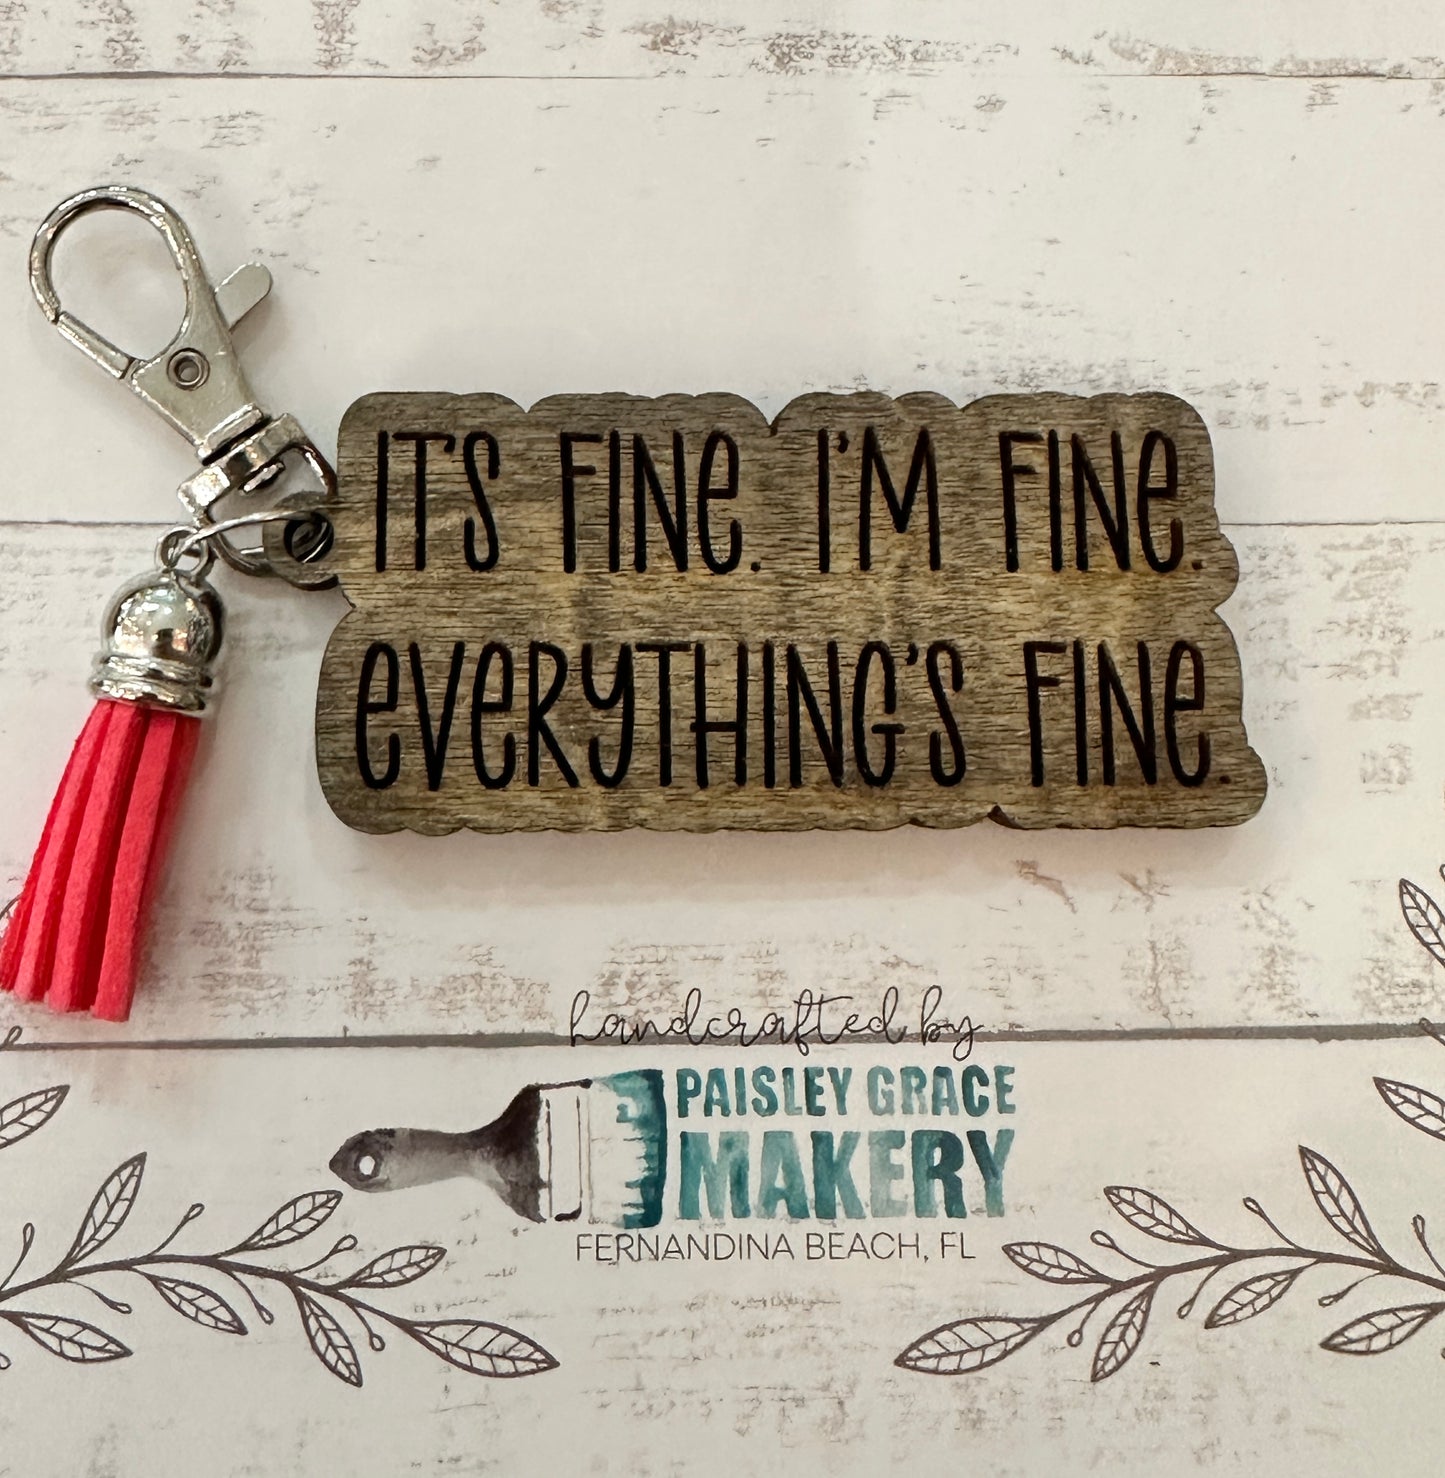 It's Fine. I'm Fine' Everything's Fine Keychain